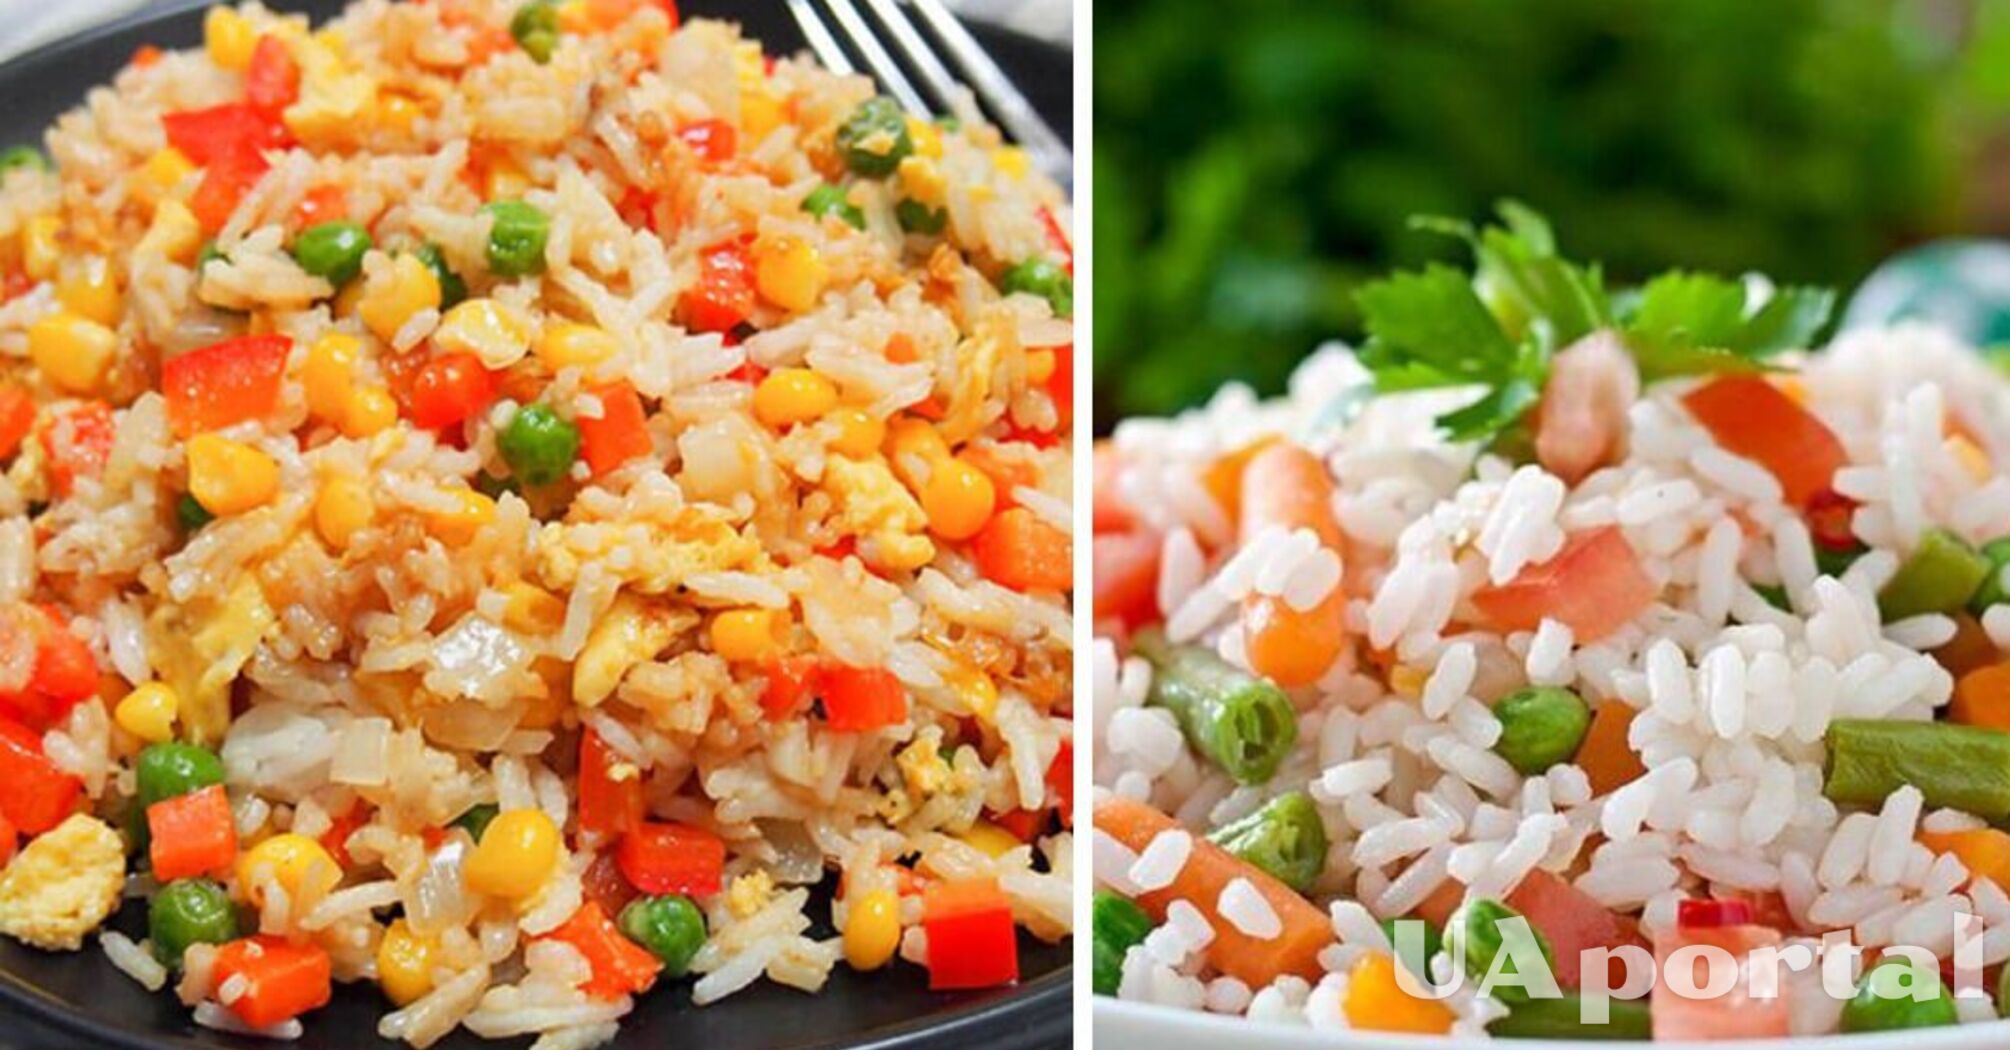 Быстро и бюджетно: рецепт риса с овощами за 30 минут